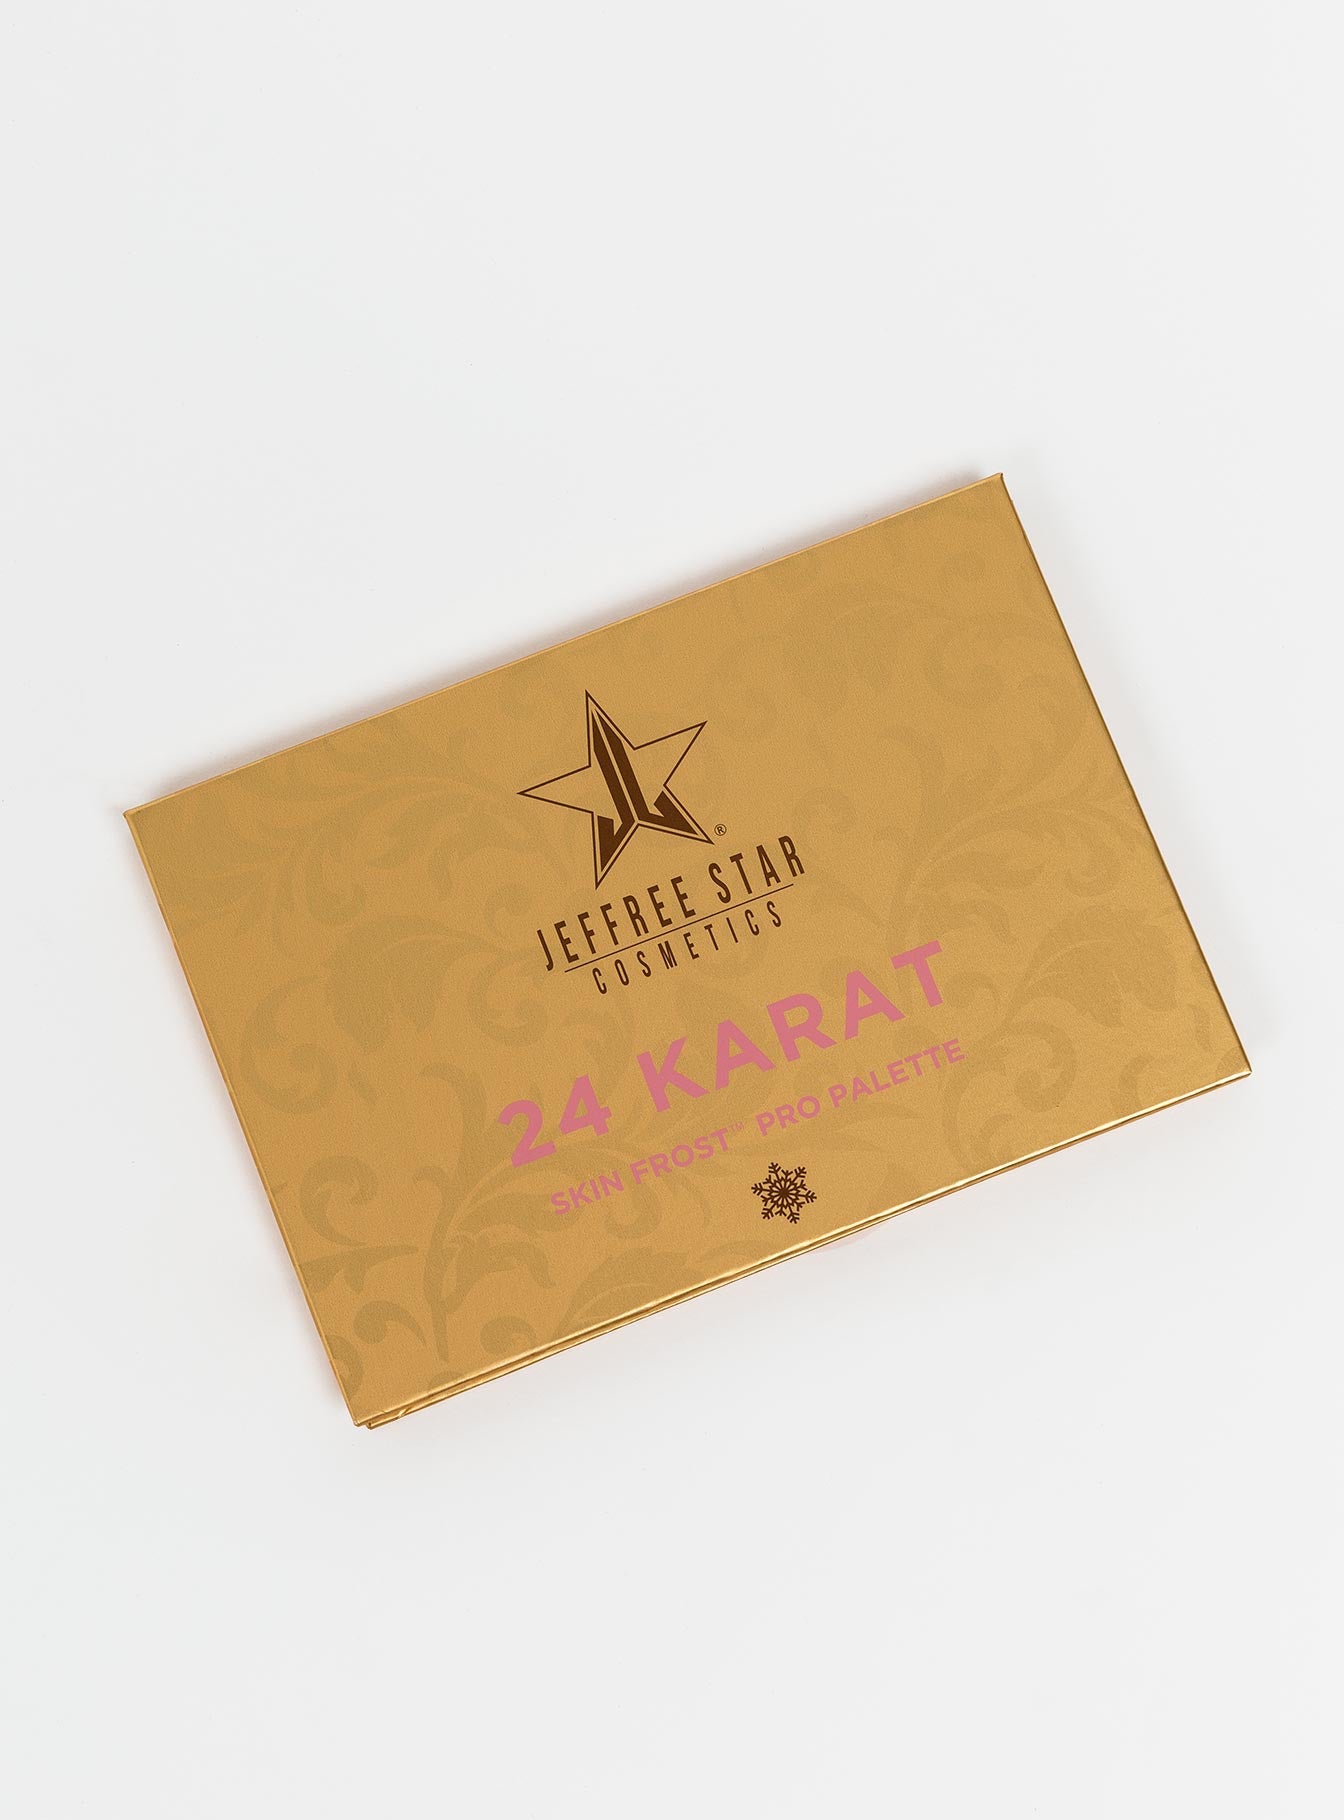 Jeffree Star Cosmetics 24 Karat Pro Palette – Princess Polly AUS